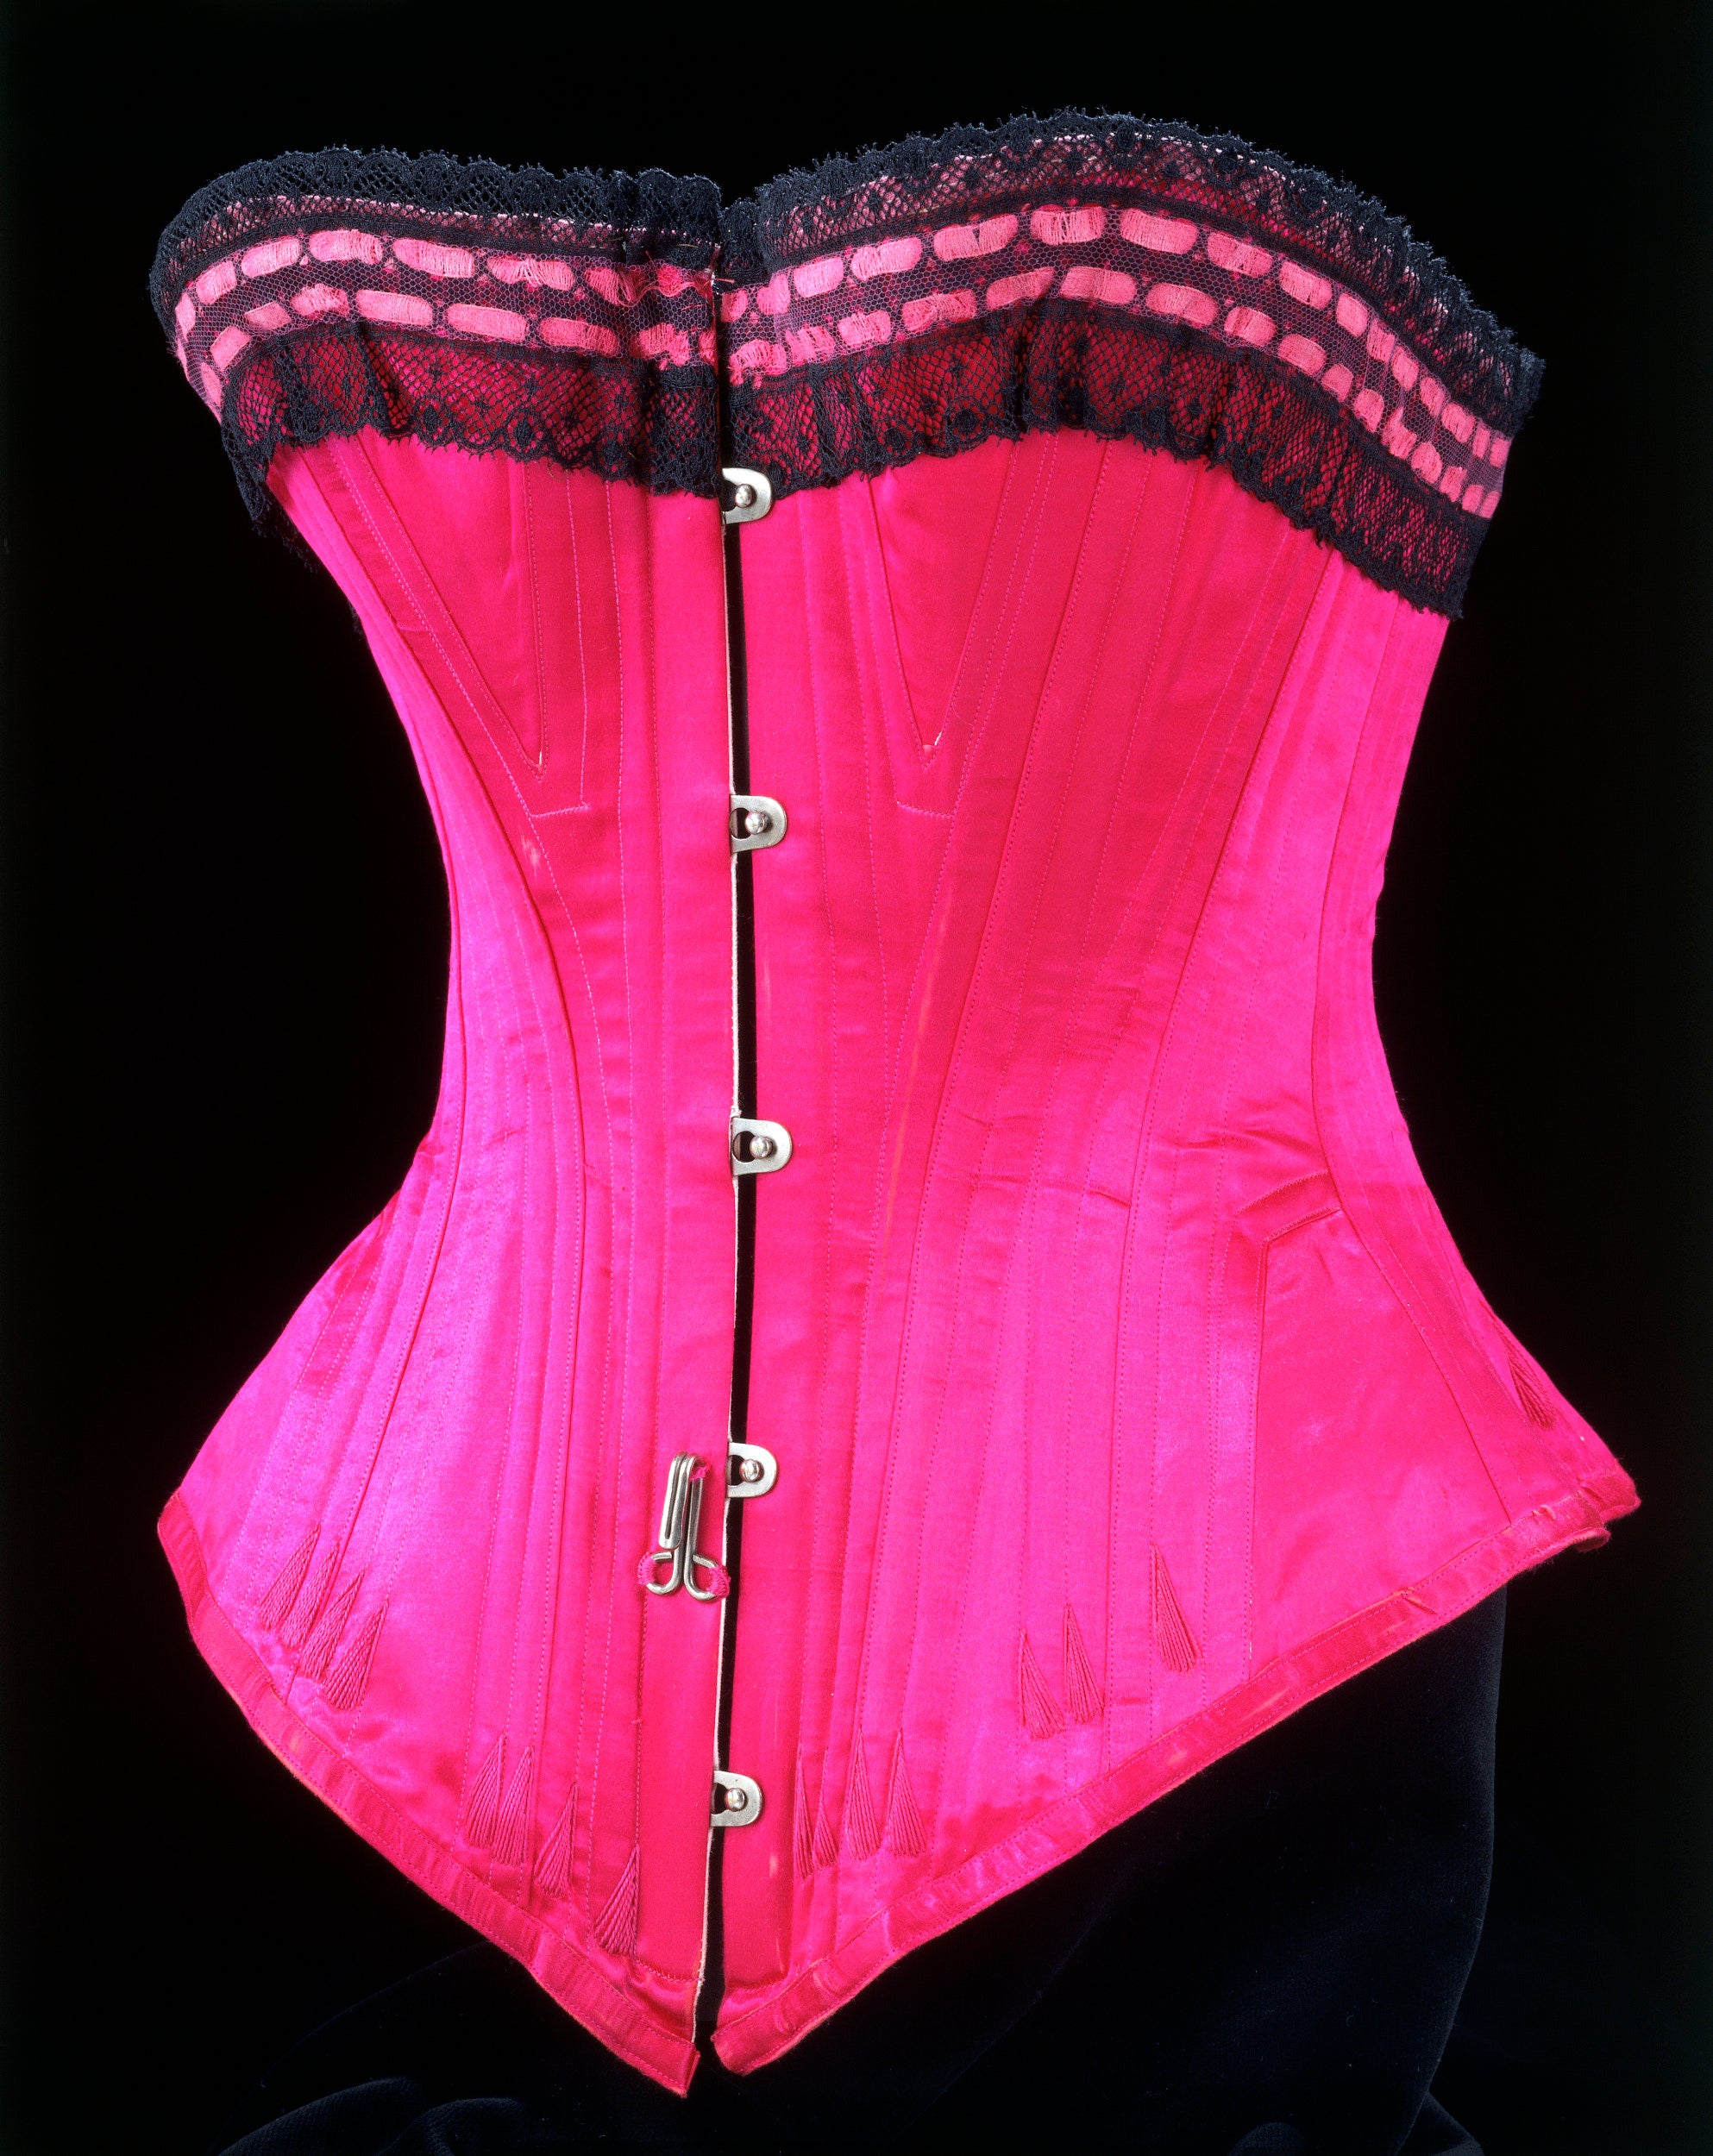 Royal corsetmaker Rigby & Peller sold, Retail industry